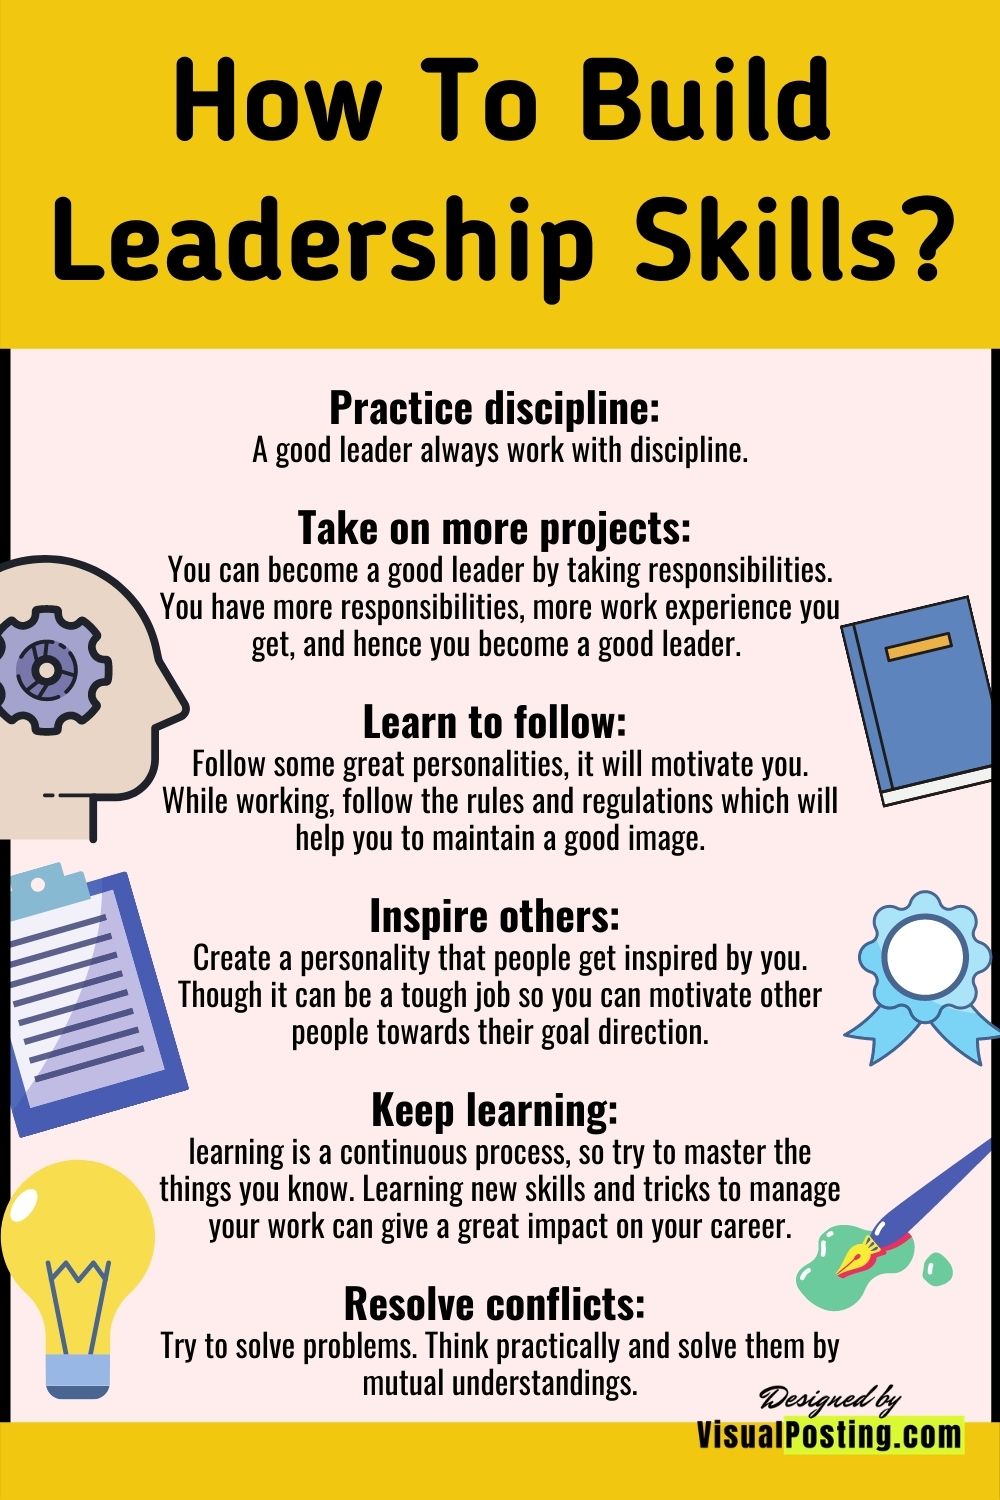 How to build leadership skills.jpg